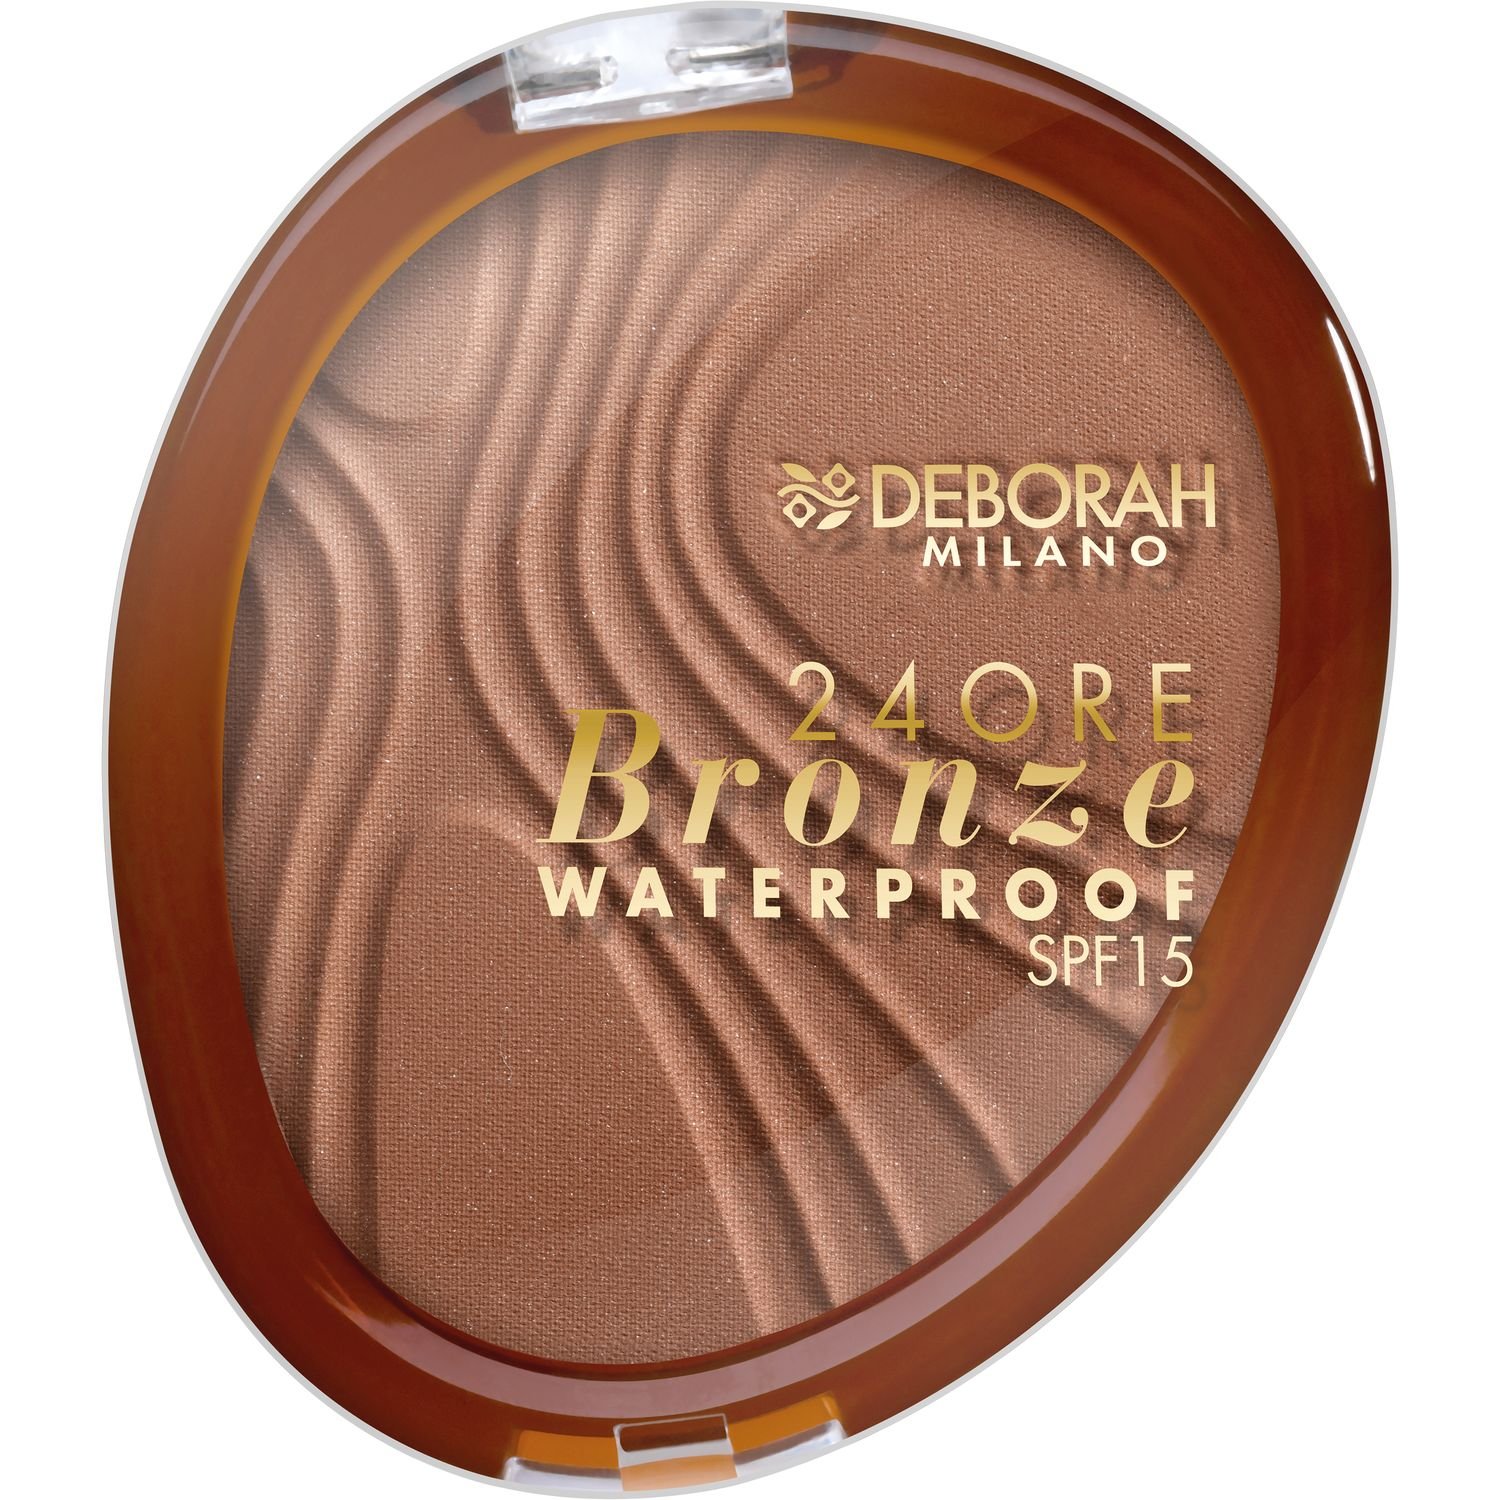 Бронзова пудра для обличчя Deborah 24 Ore Bronzer Waterproof SPF15, тон 02, 12 г - фото 1